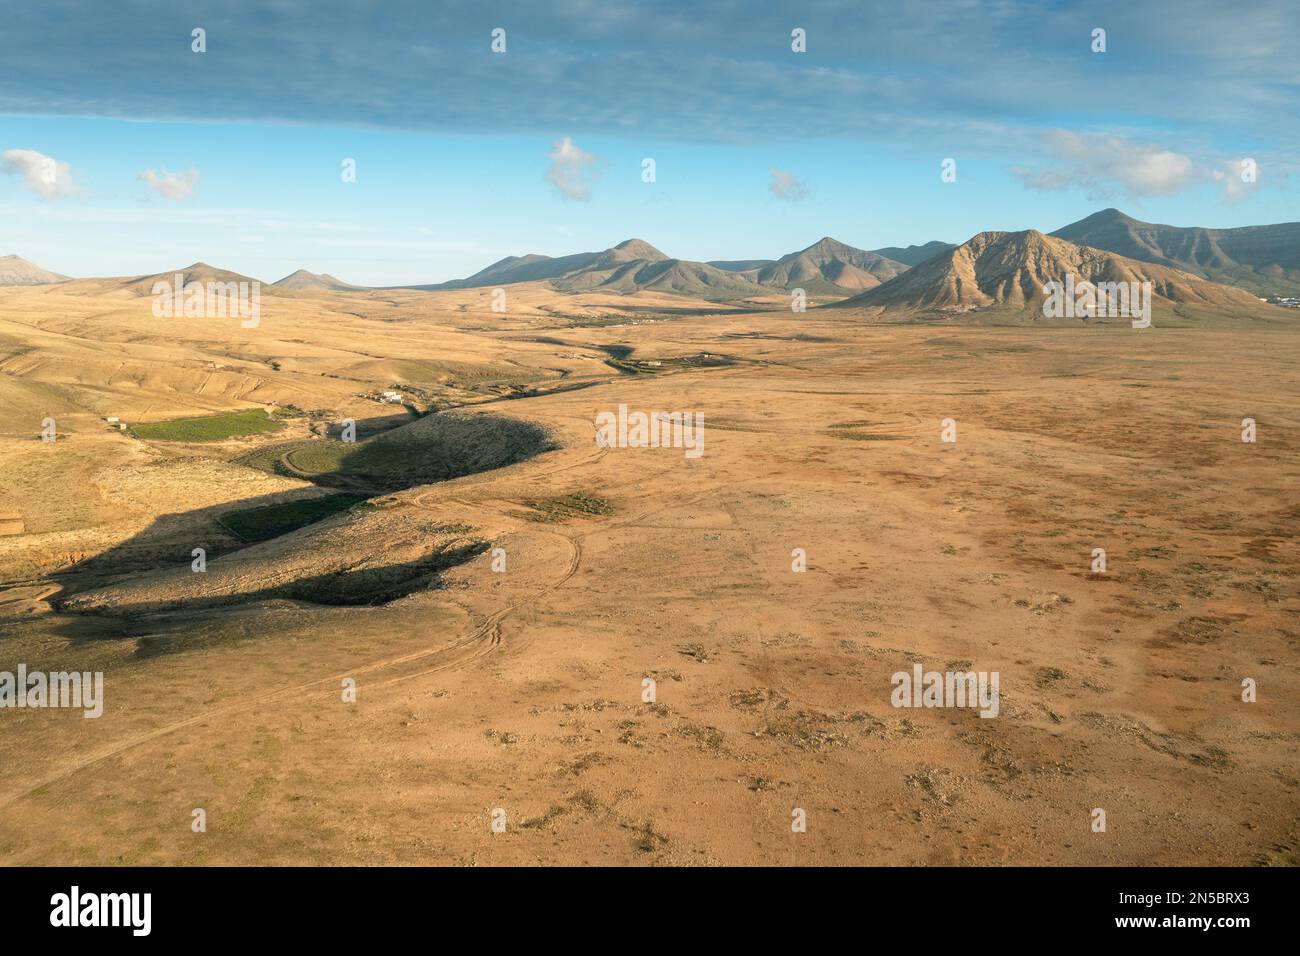 Halbsüste Lomo de Esquinzo mit Montana Tindaya, Luftaufnahme, Kanarische Inseln, Fuerteventura Stockfoto